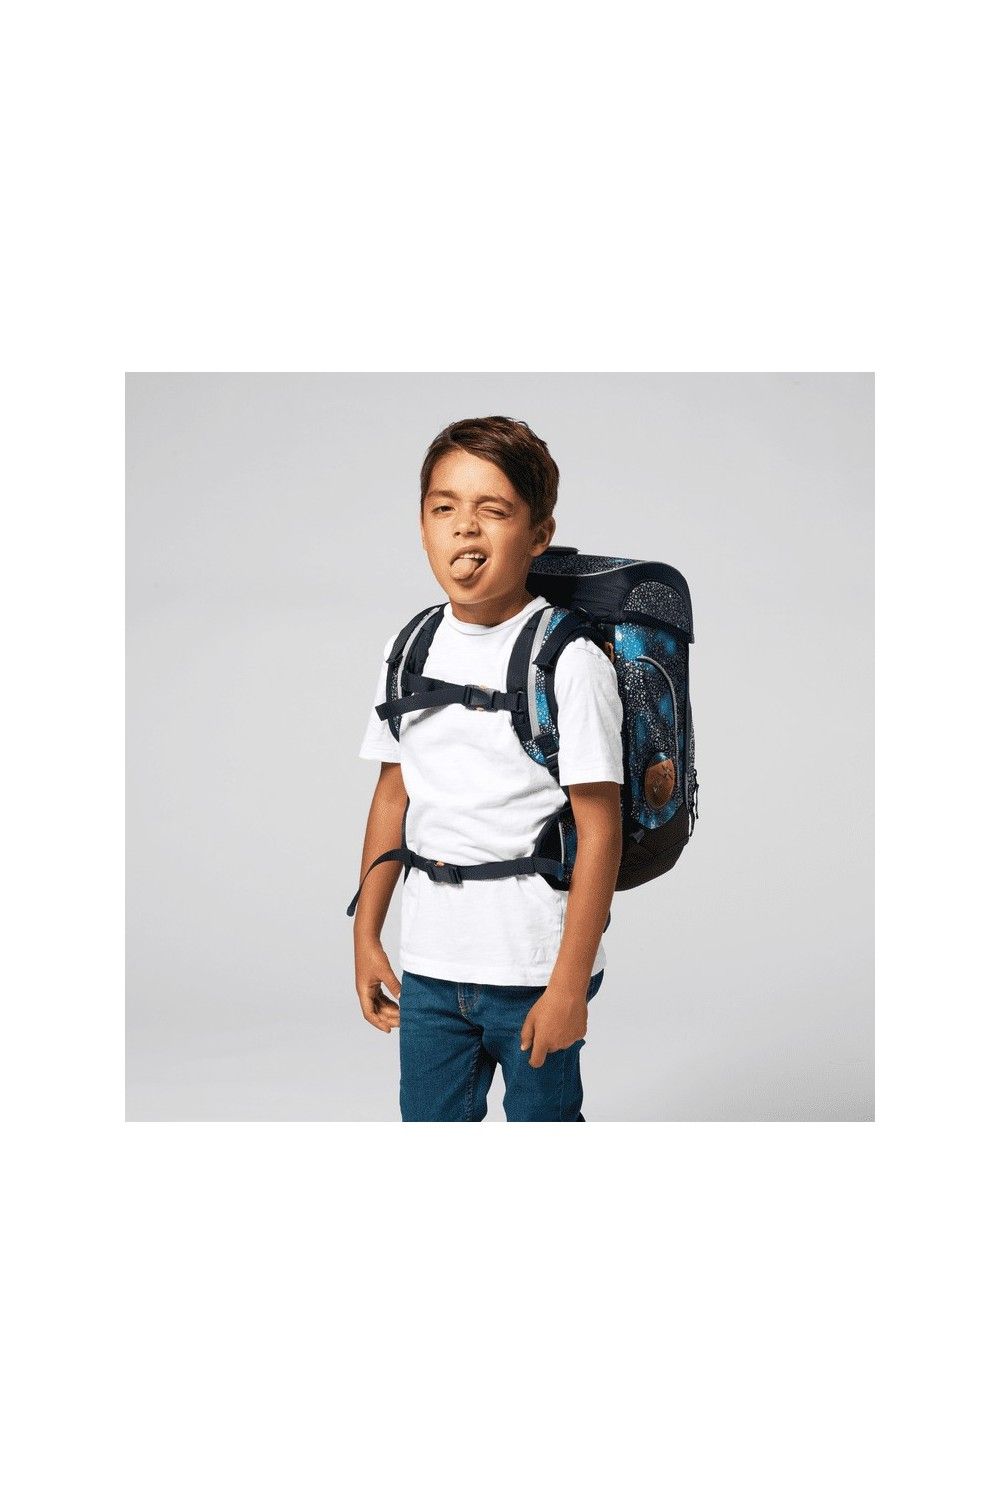 ergobag cubo school backpack set 5 pieces Limited Edition Bär Anhalter Galaxy